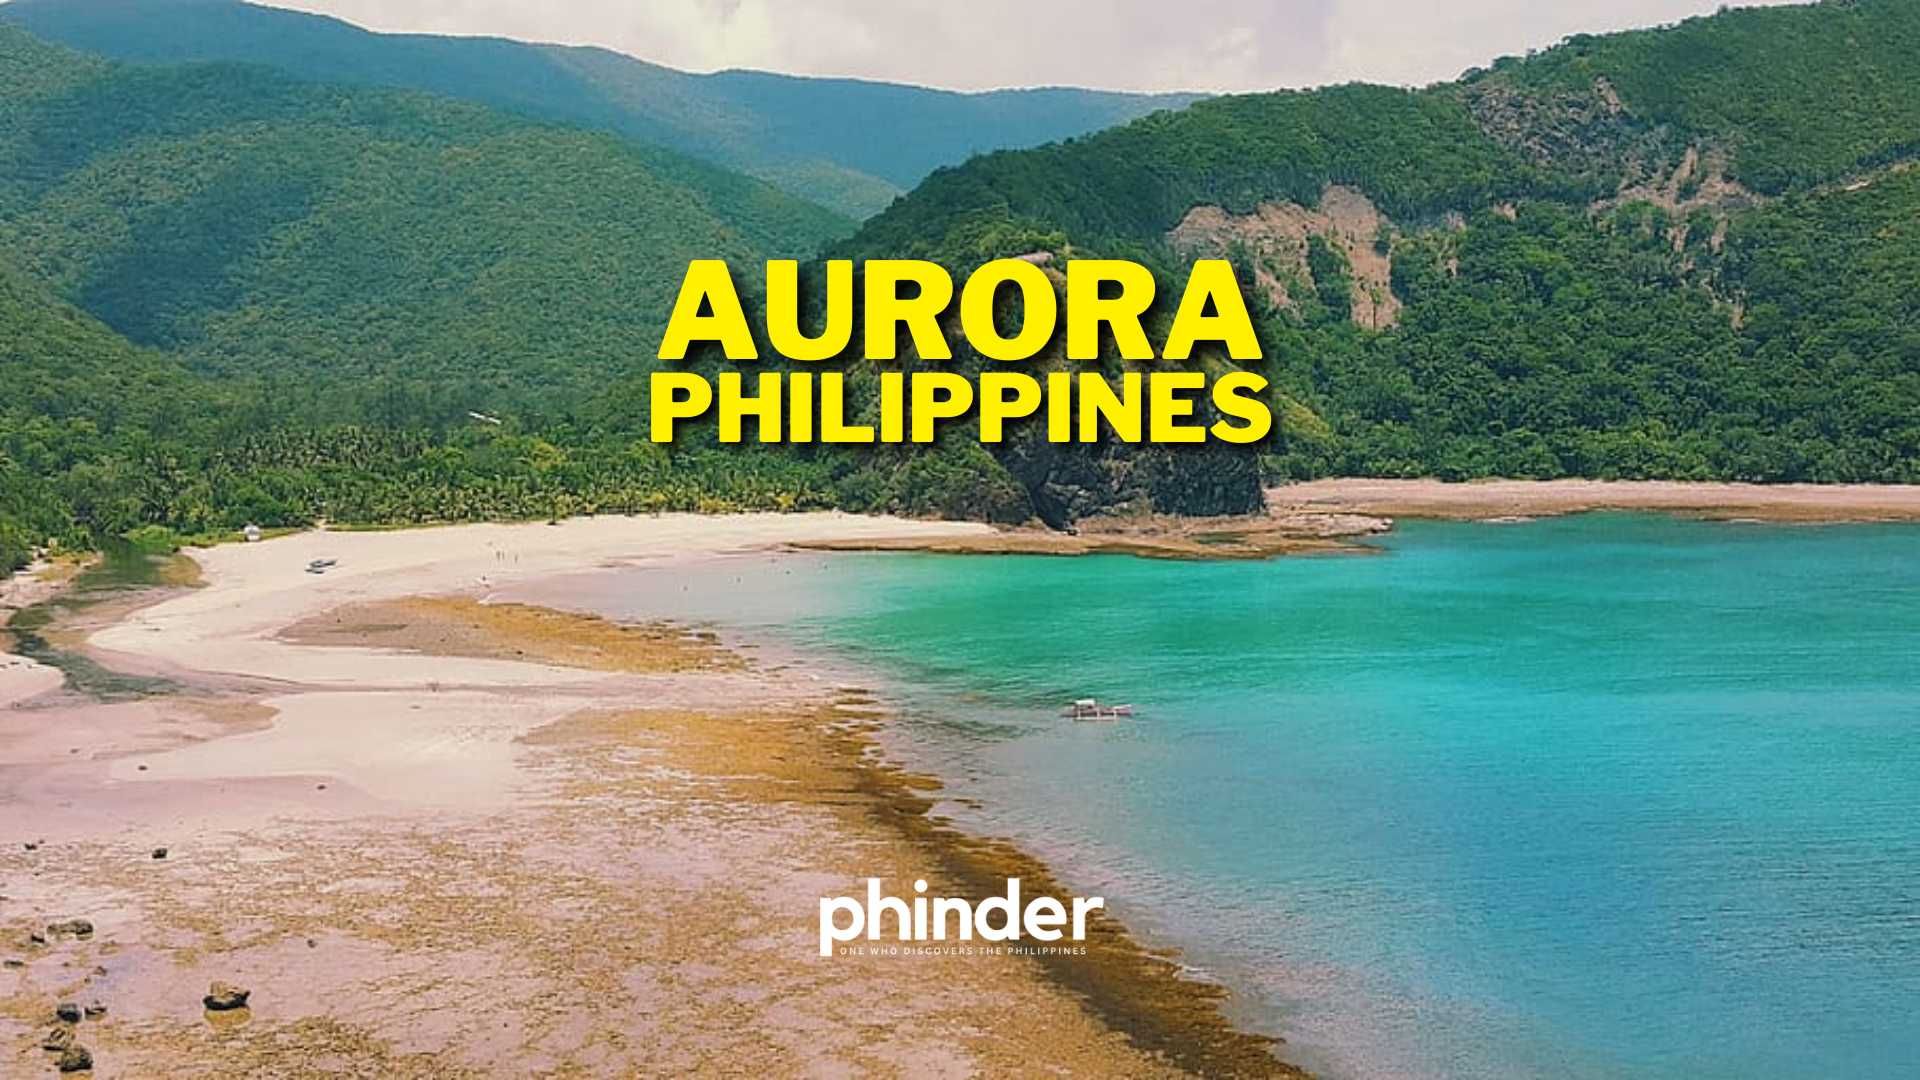 Aurora, Philippines phinder.ph